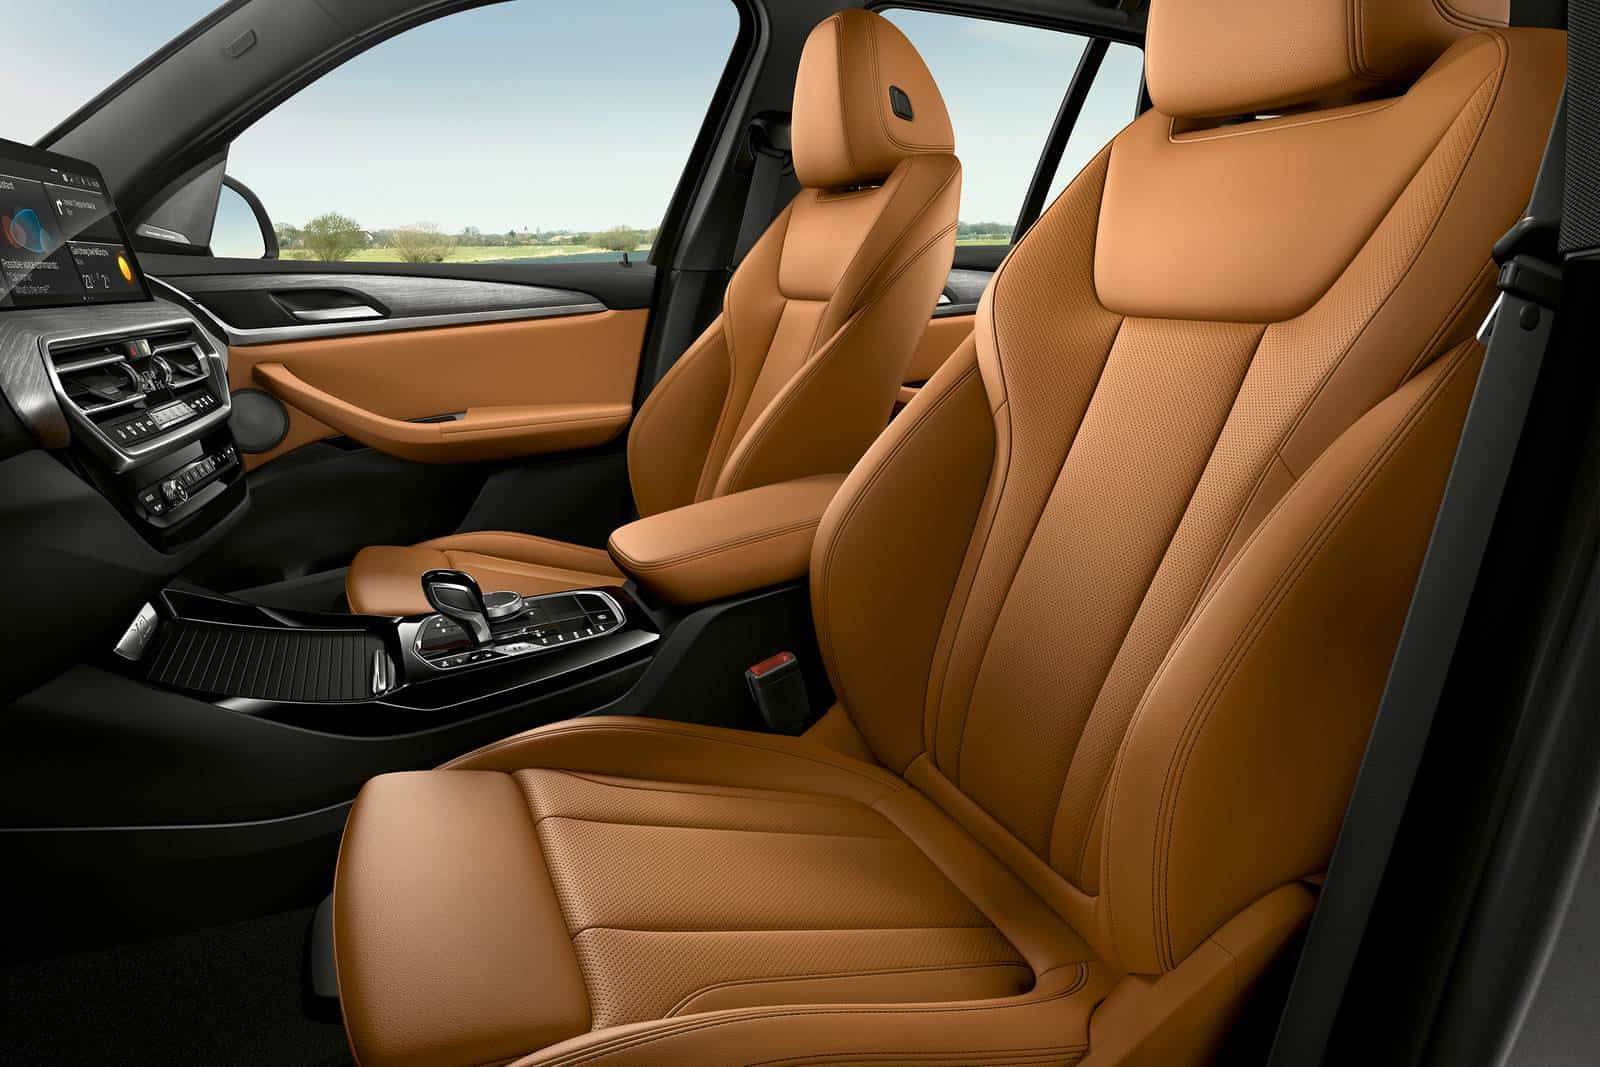 2022 BMW x3 review - interior